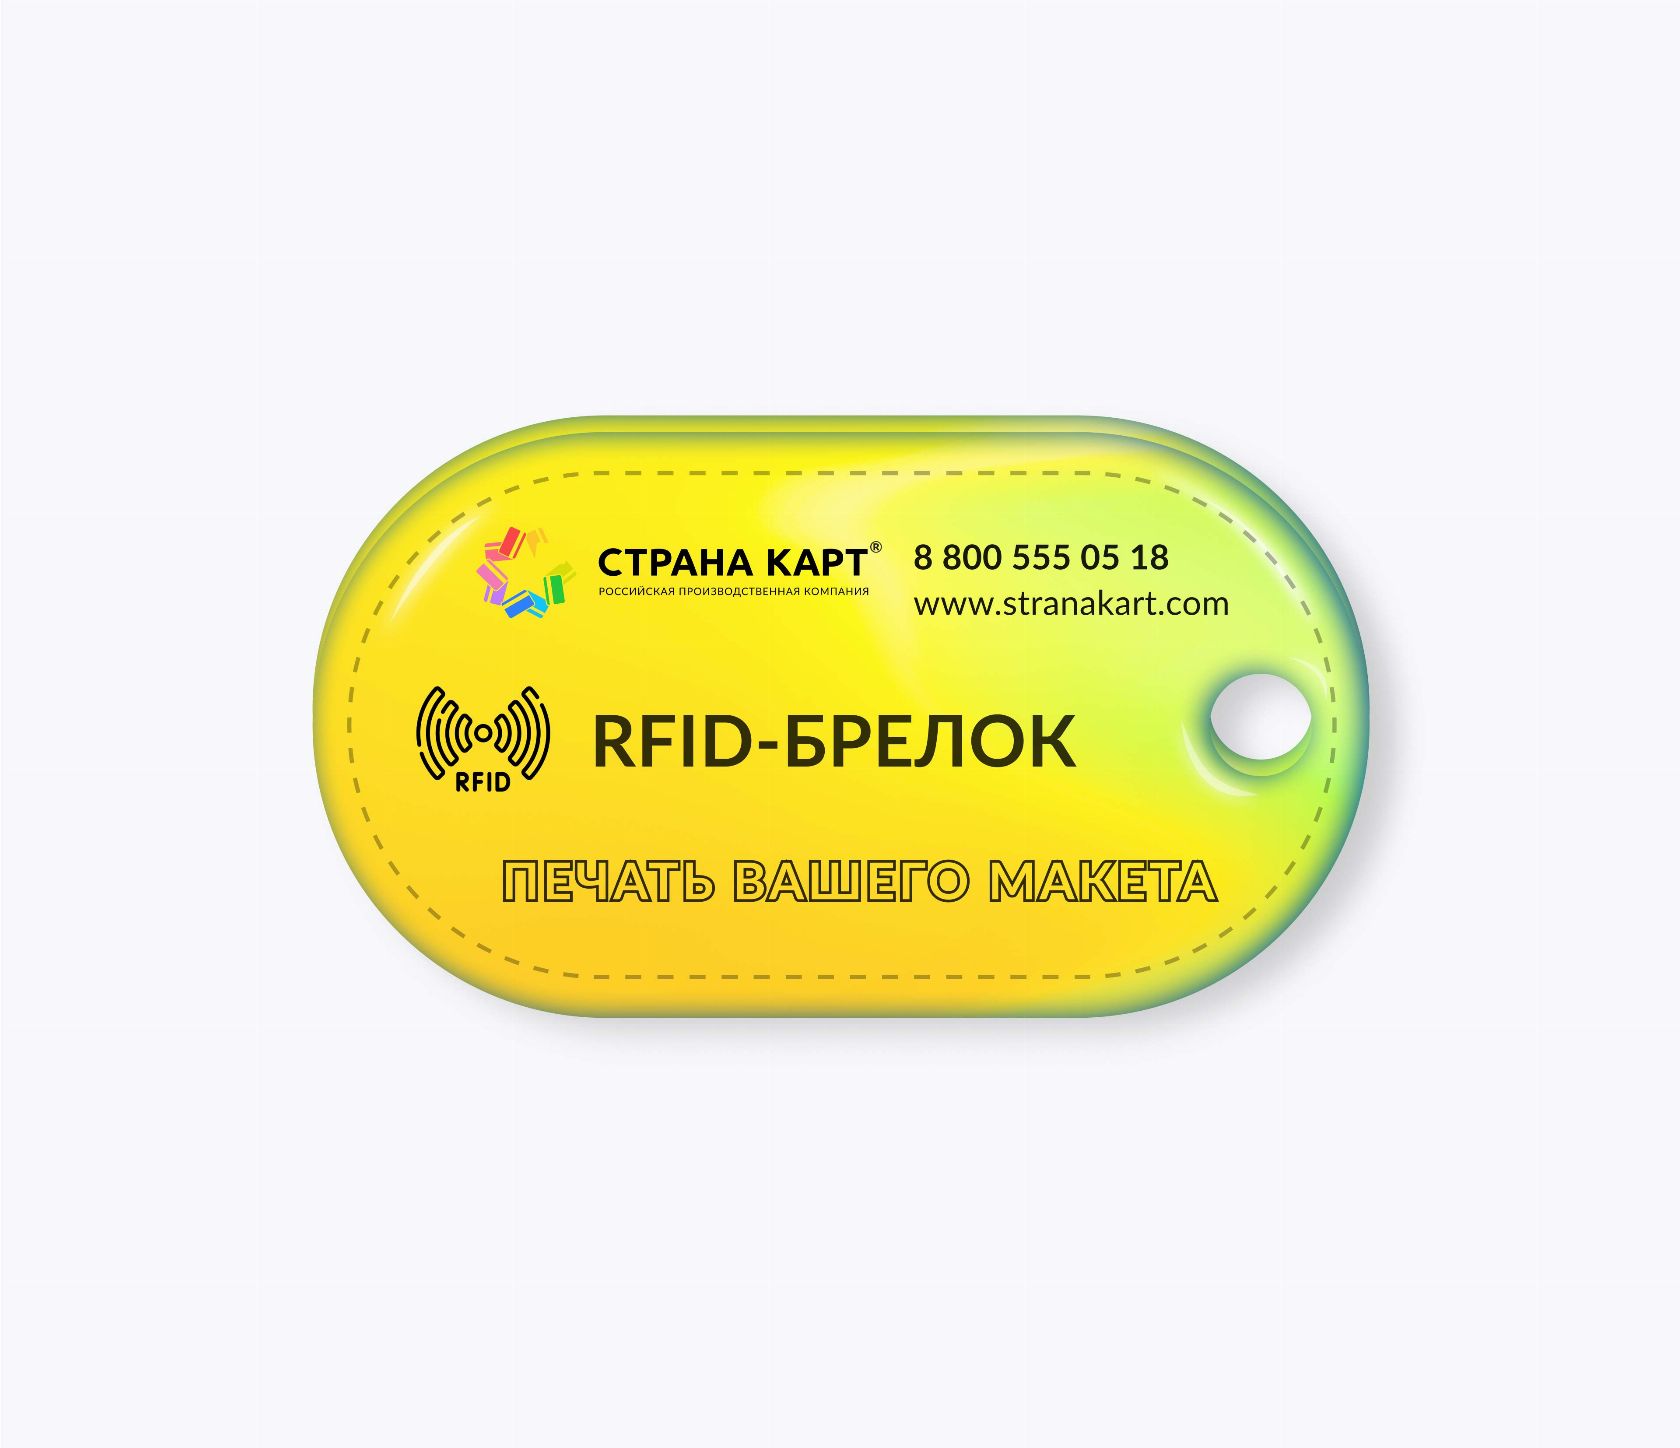 Овальные RFID-брелоки NEOKEY® с чипом NXP MIFARE Plus SE 1k 7 byte UID RFID-брелоки NEOKEY® с чипом NXP MIFARE Plus SE 1k 7 byte UID и вашим логотипом